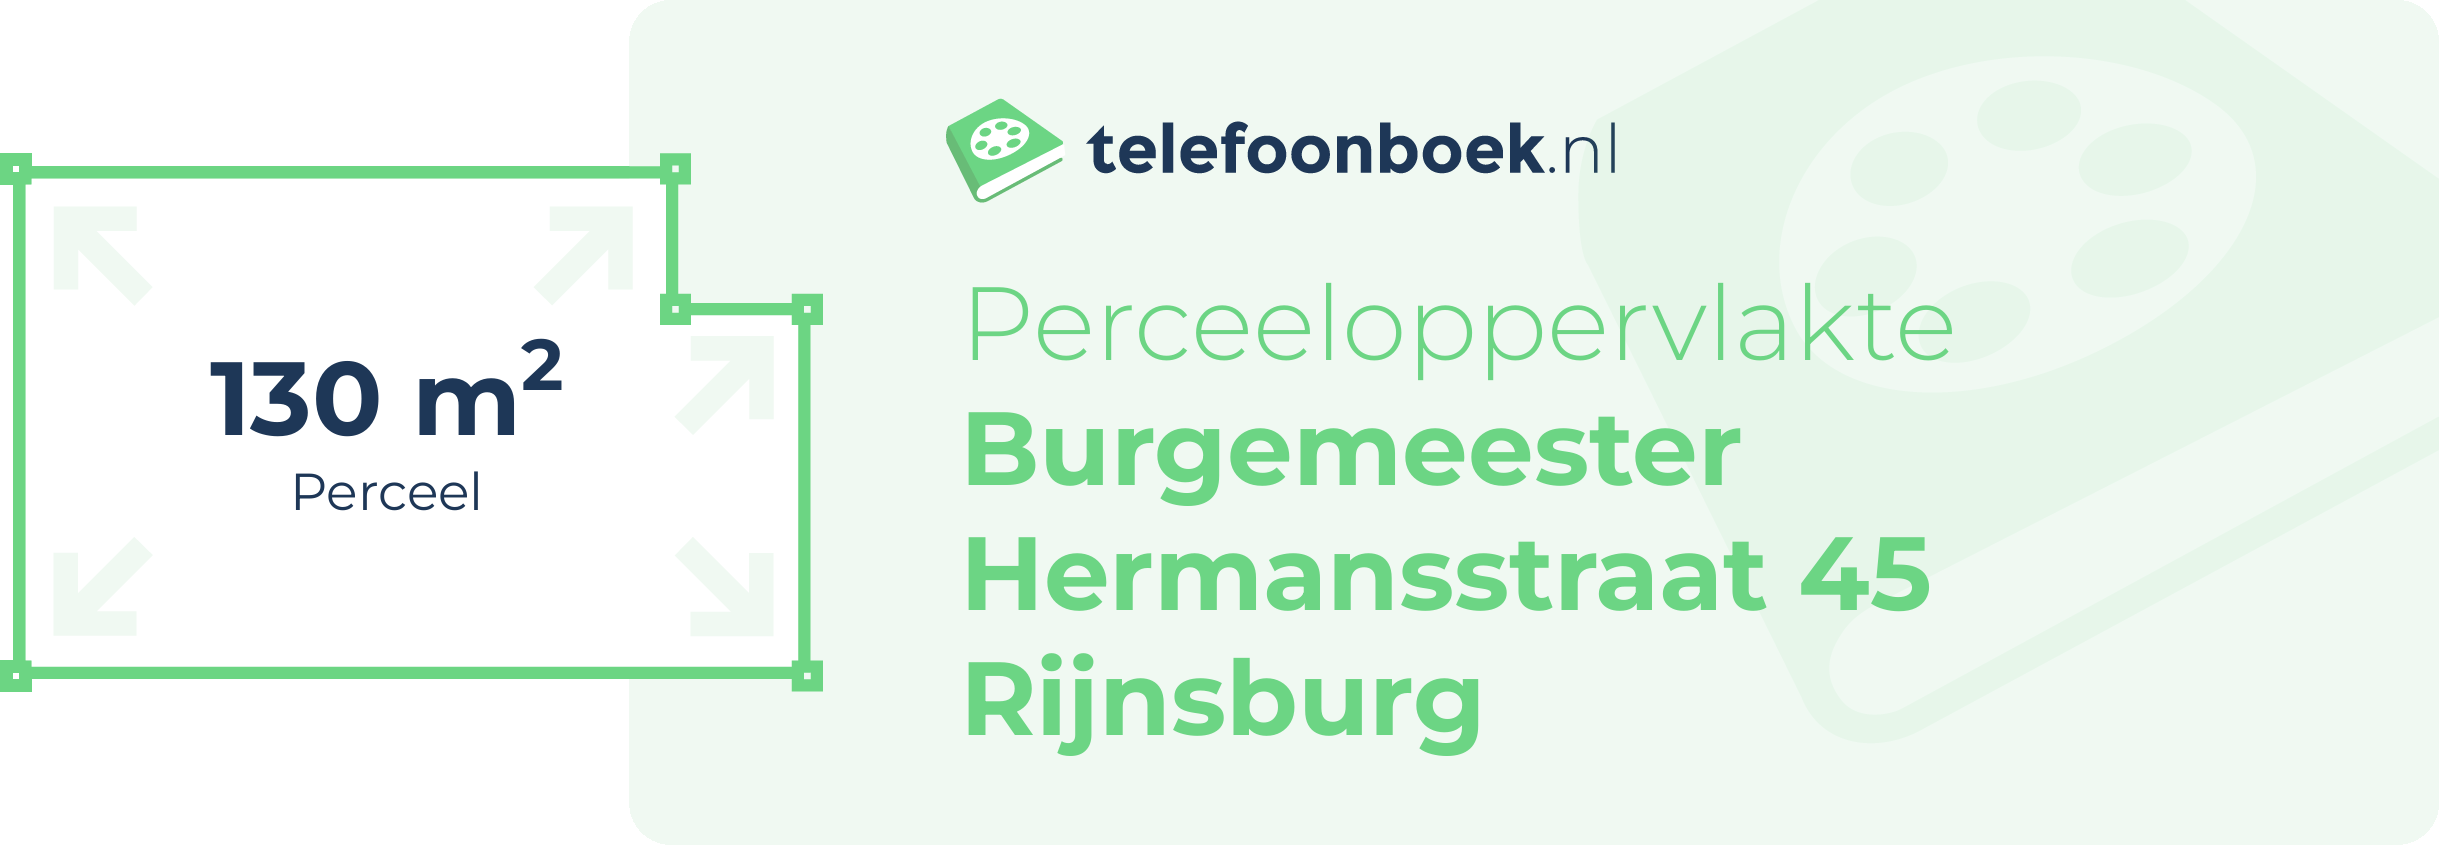 Perceeloppervlakte Burgemeester Hermansstraat 45 Rijnsburg